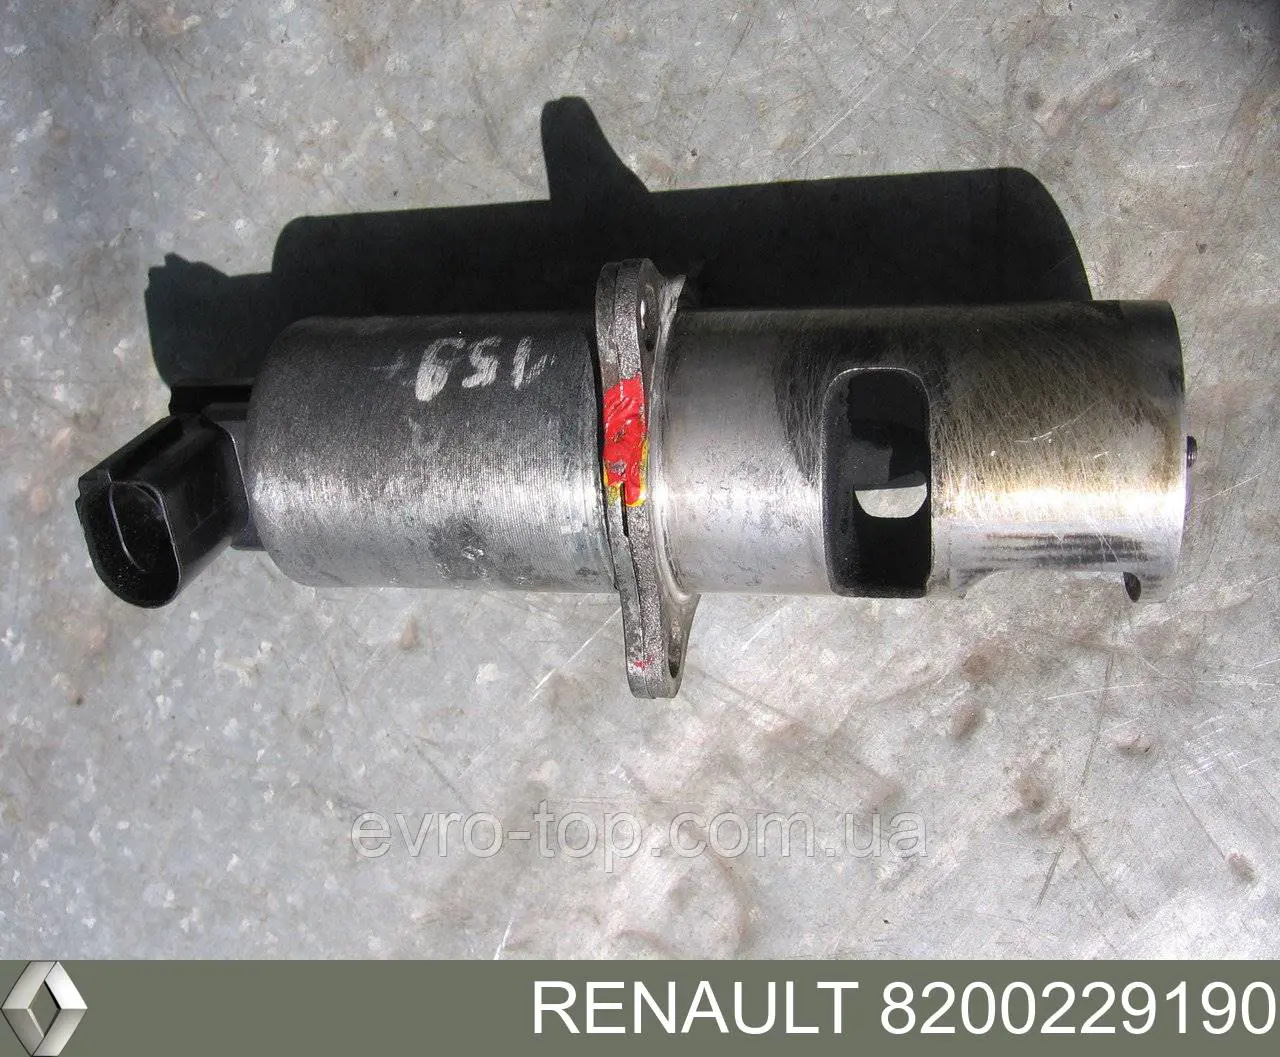 8200229190 Renault (RVI) клапан егр